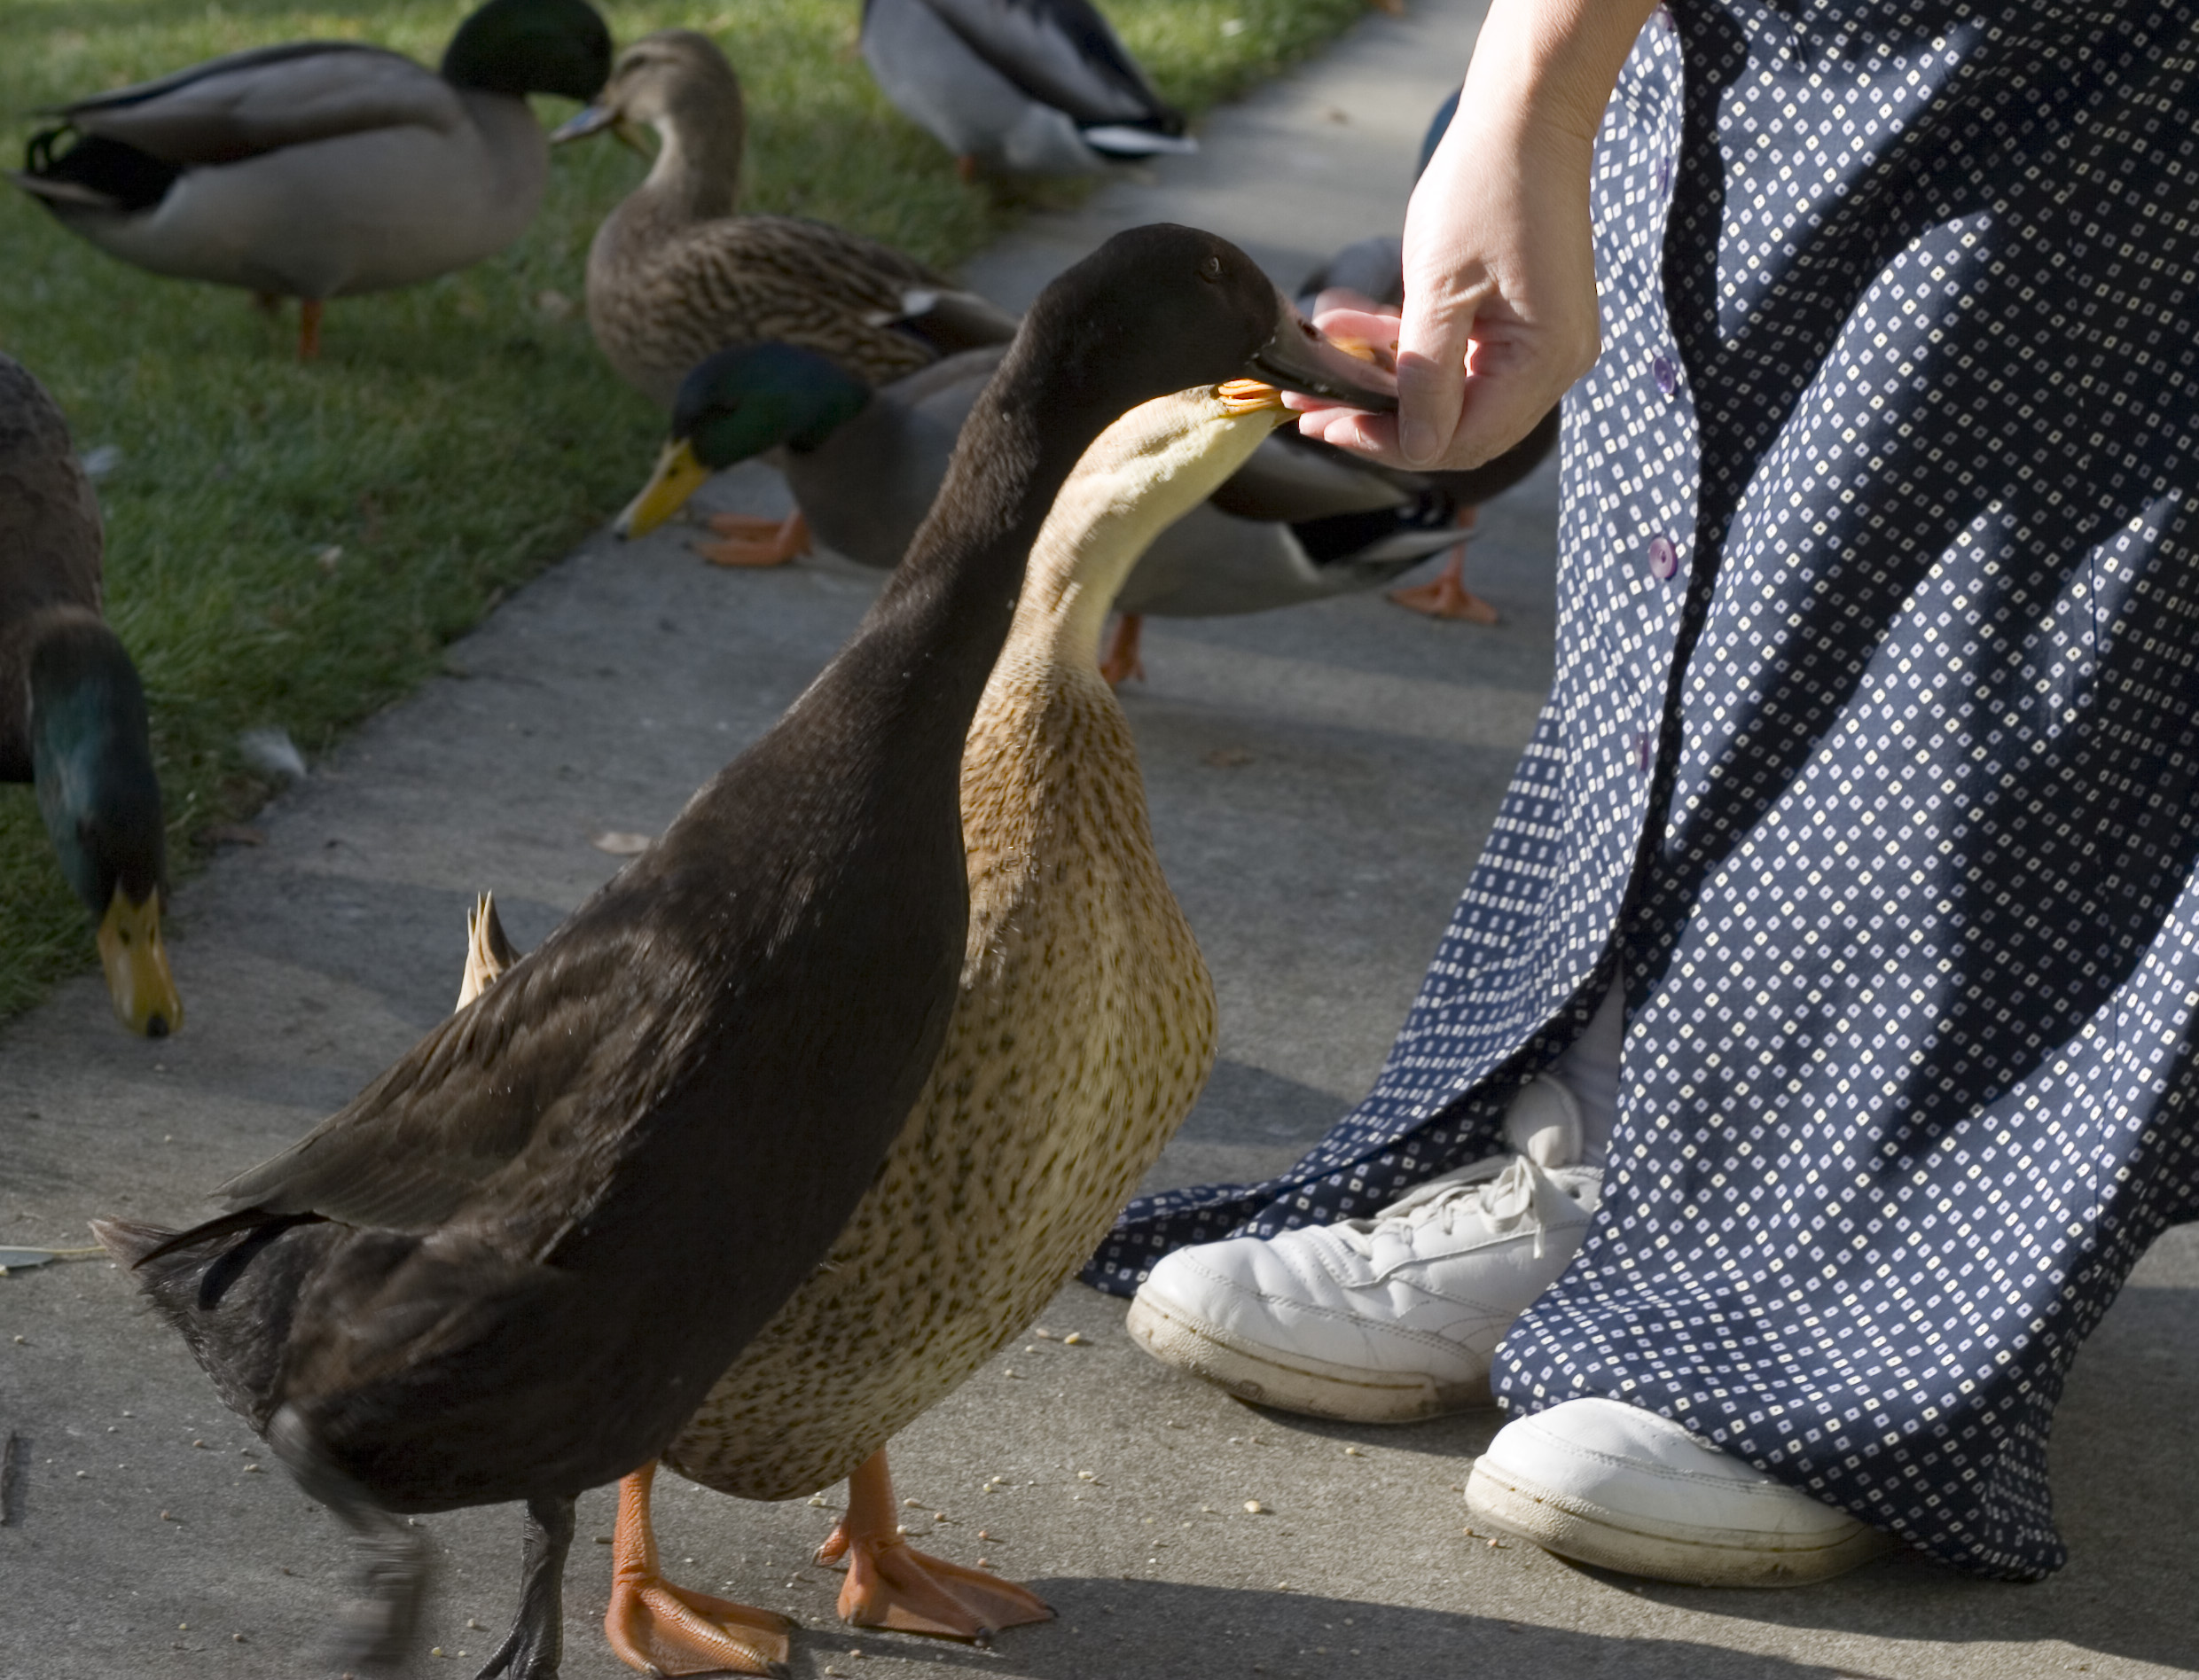 Feeding Ducks by Hand | photo page - everystockphoto